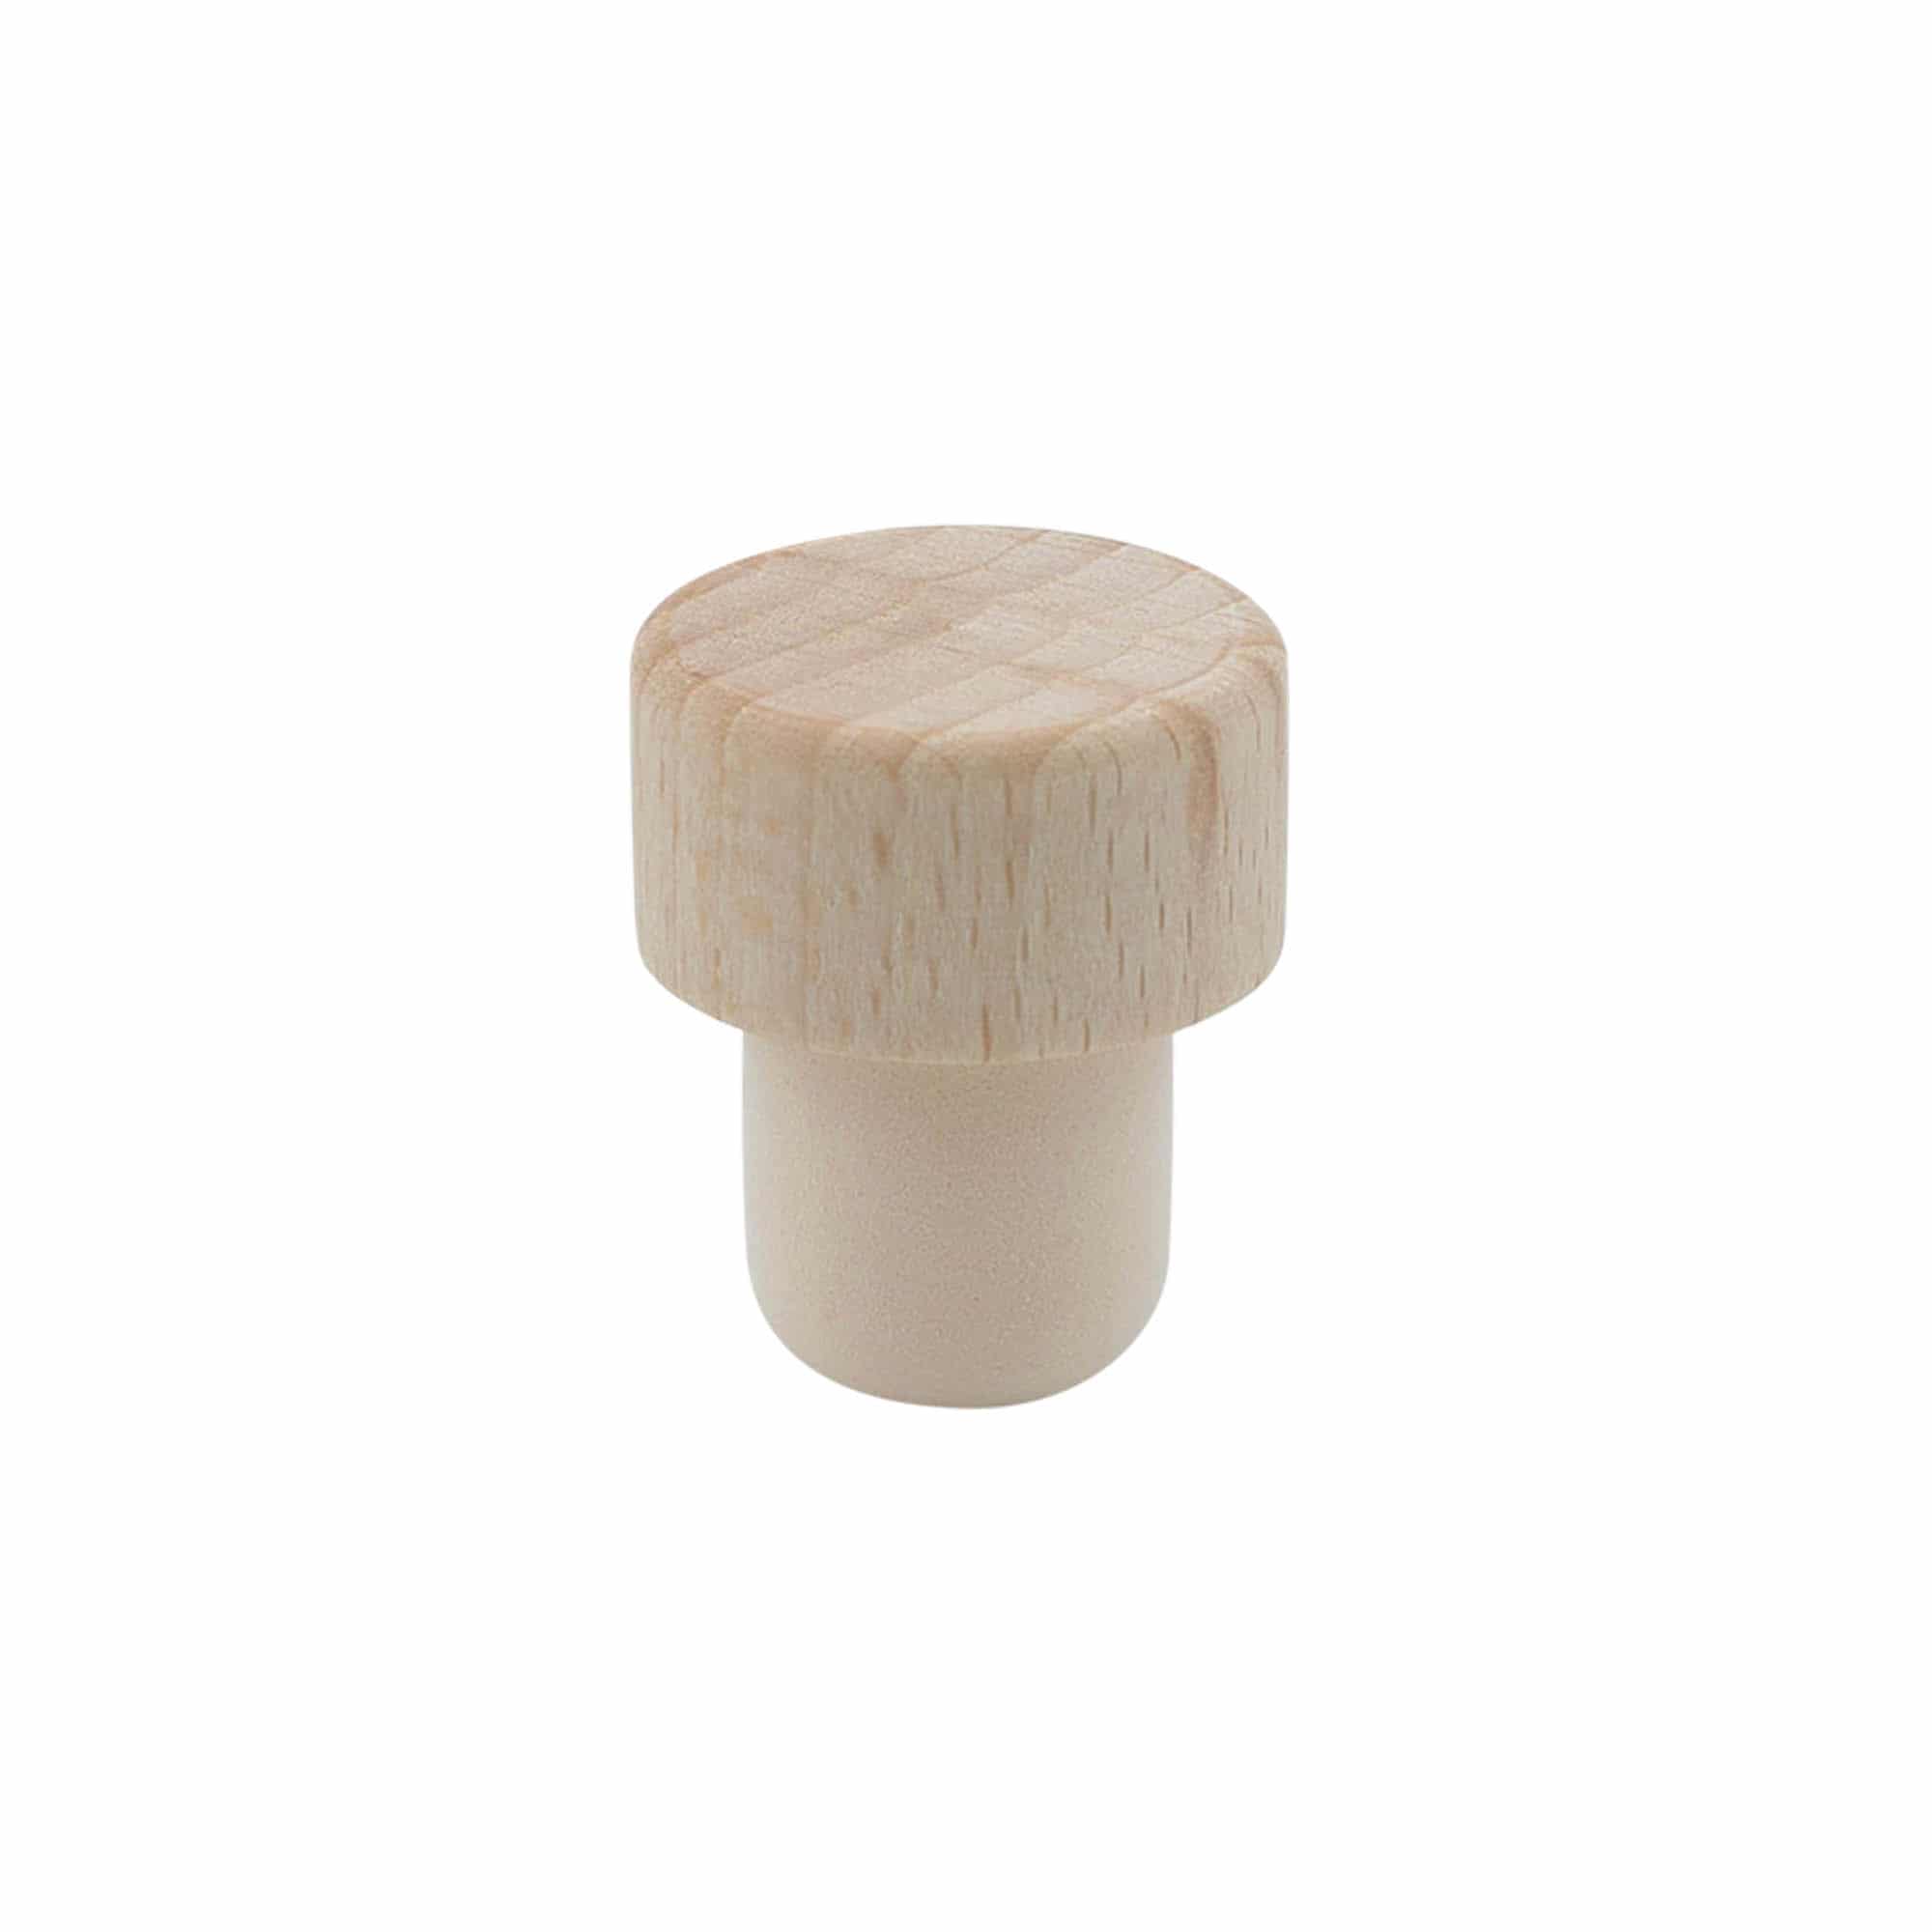 19 mm mushroom cork, wood, for opening: cork